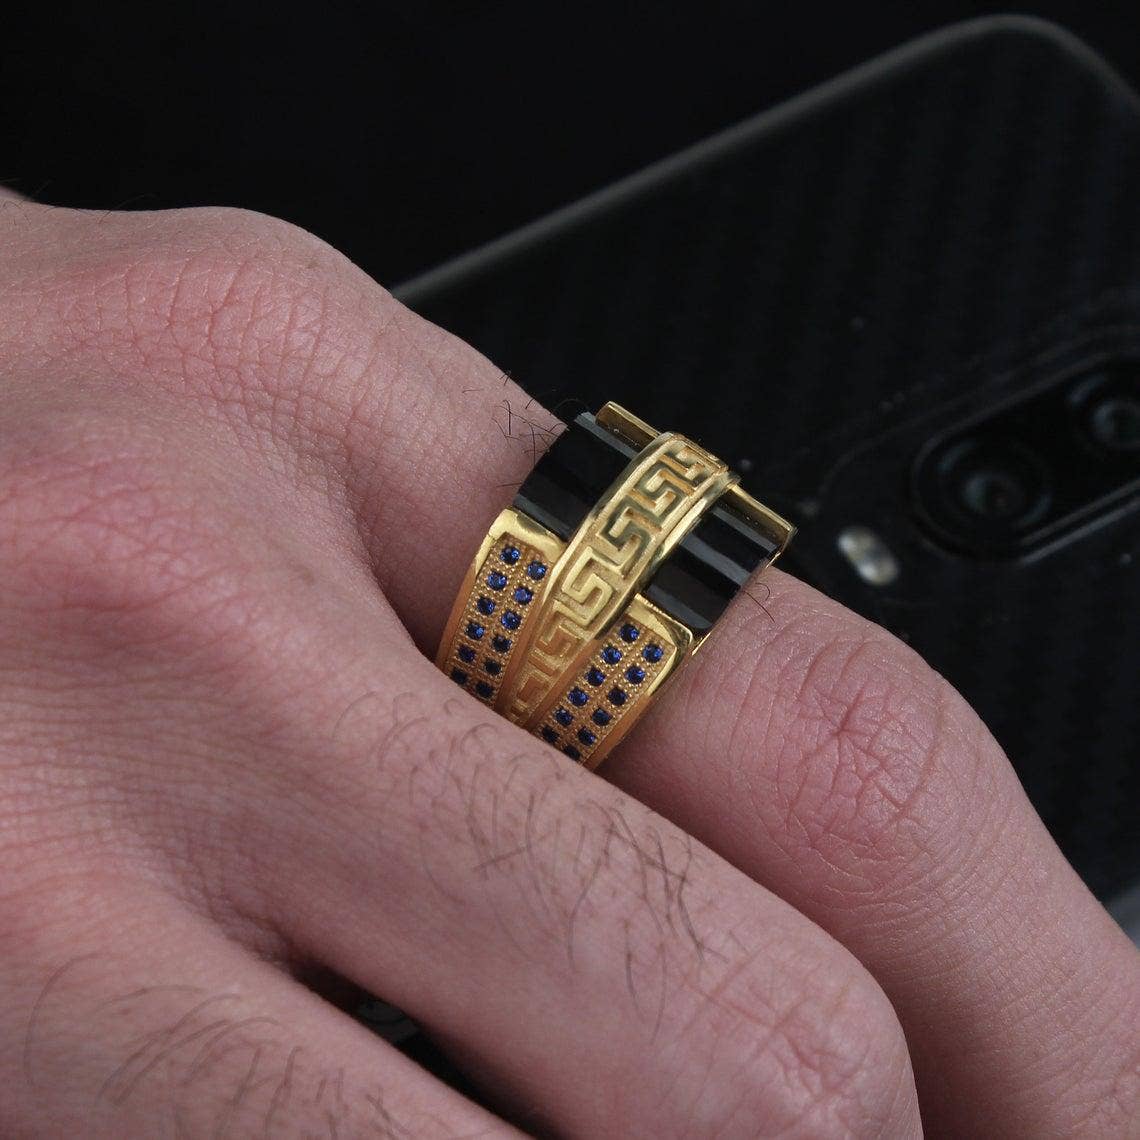 Wedding Diamond Ring Index Finger Size Ring at Rs 1199.00 | अमेरिकन डायमंड  की अंगूठी, अमेरिकन डायमंड फिंगर रिंग - Trinkle, Lucknow | ID: 2852927599491